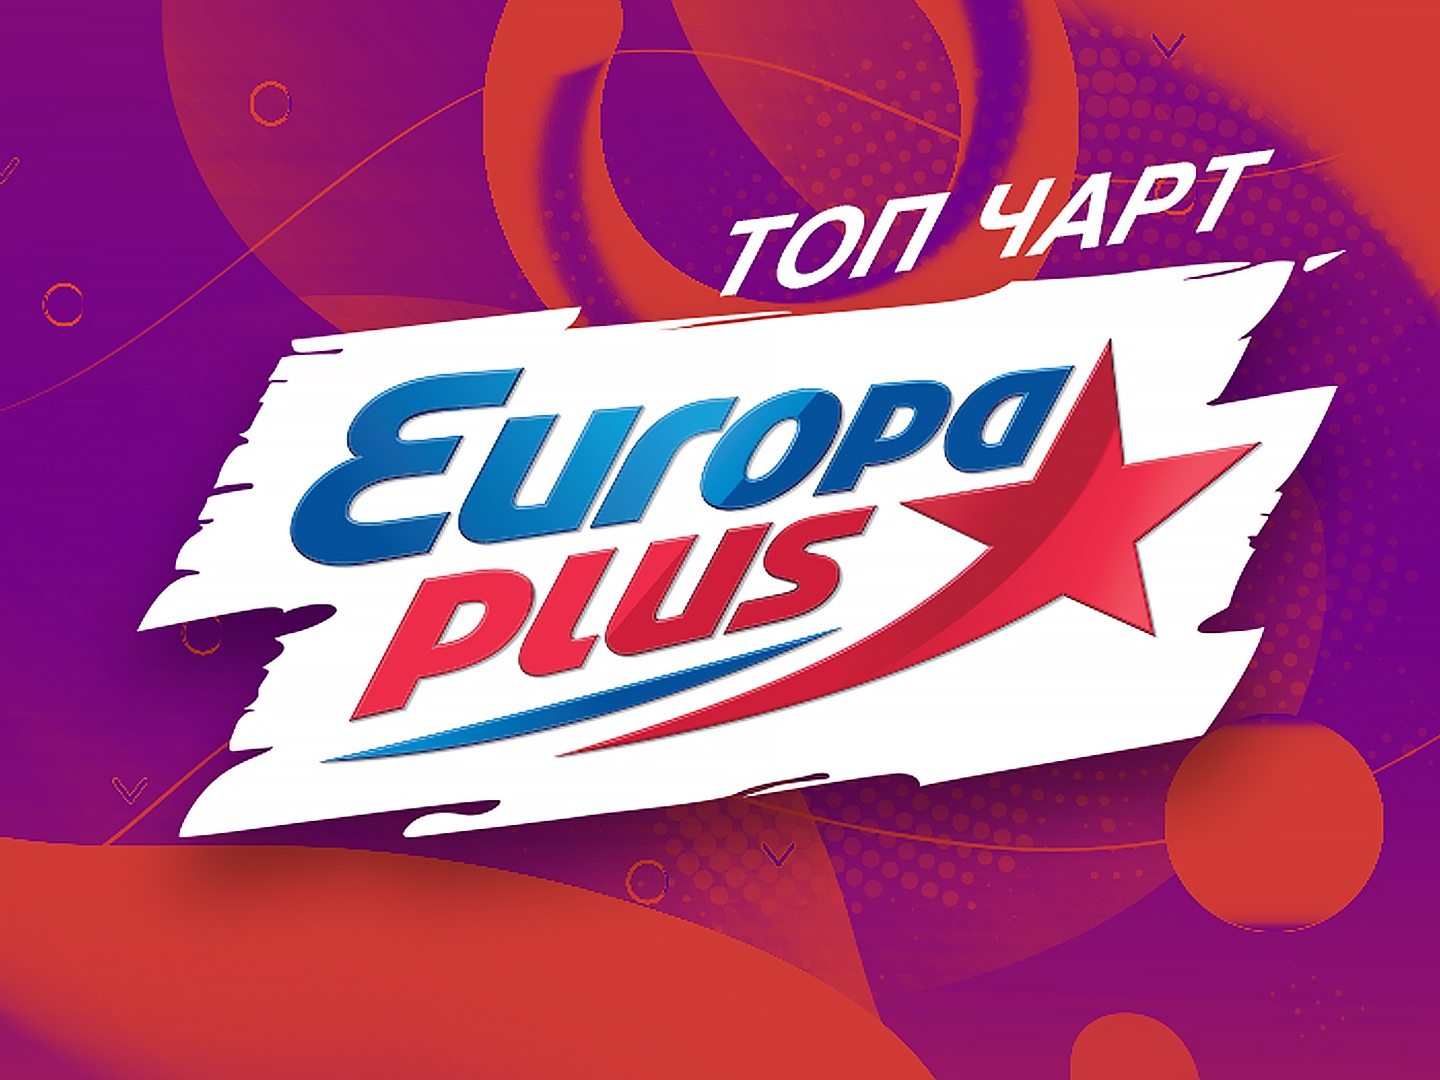 Включи топ хит. Europa Plus чарт. Европа плюс. Значок Европа плюс. Европа плюс чарт муз ТВ.